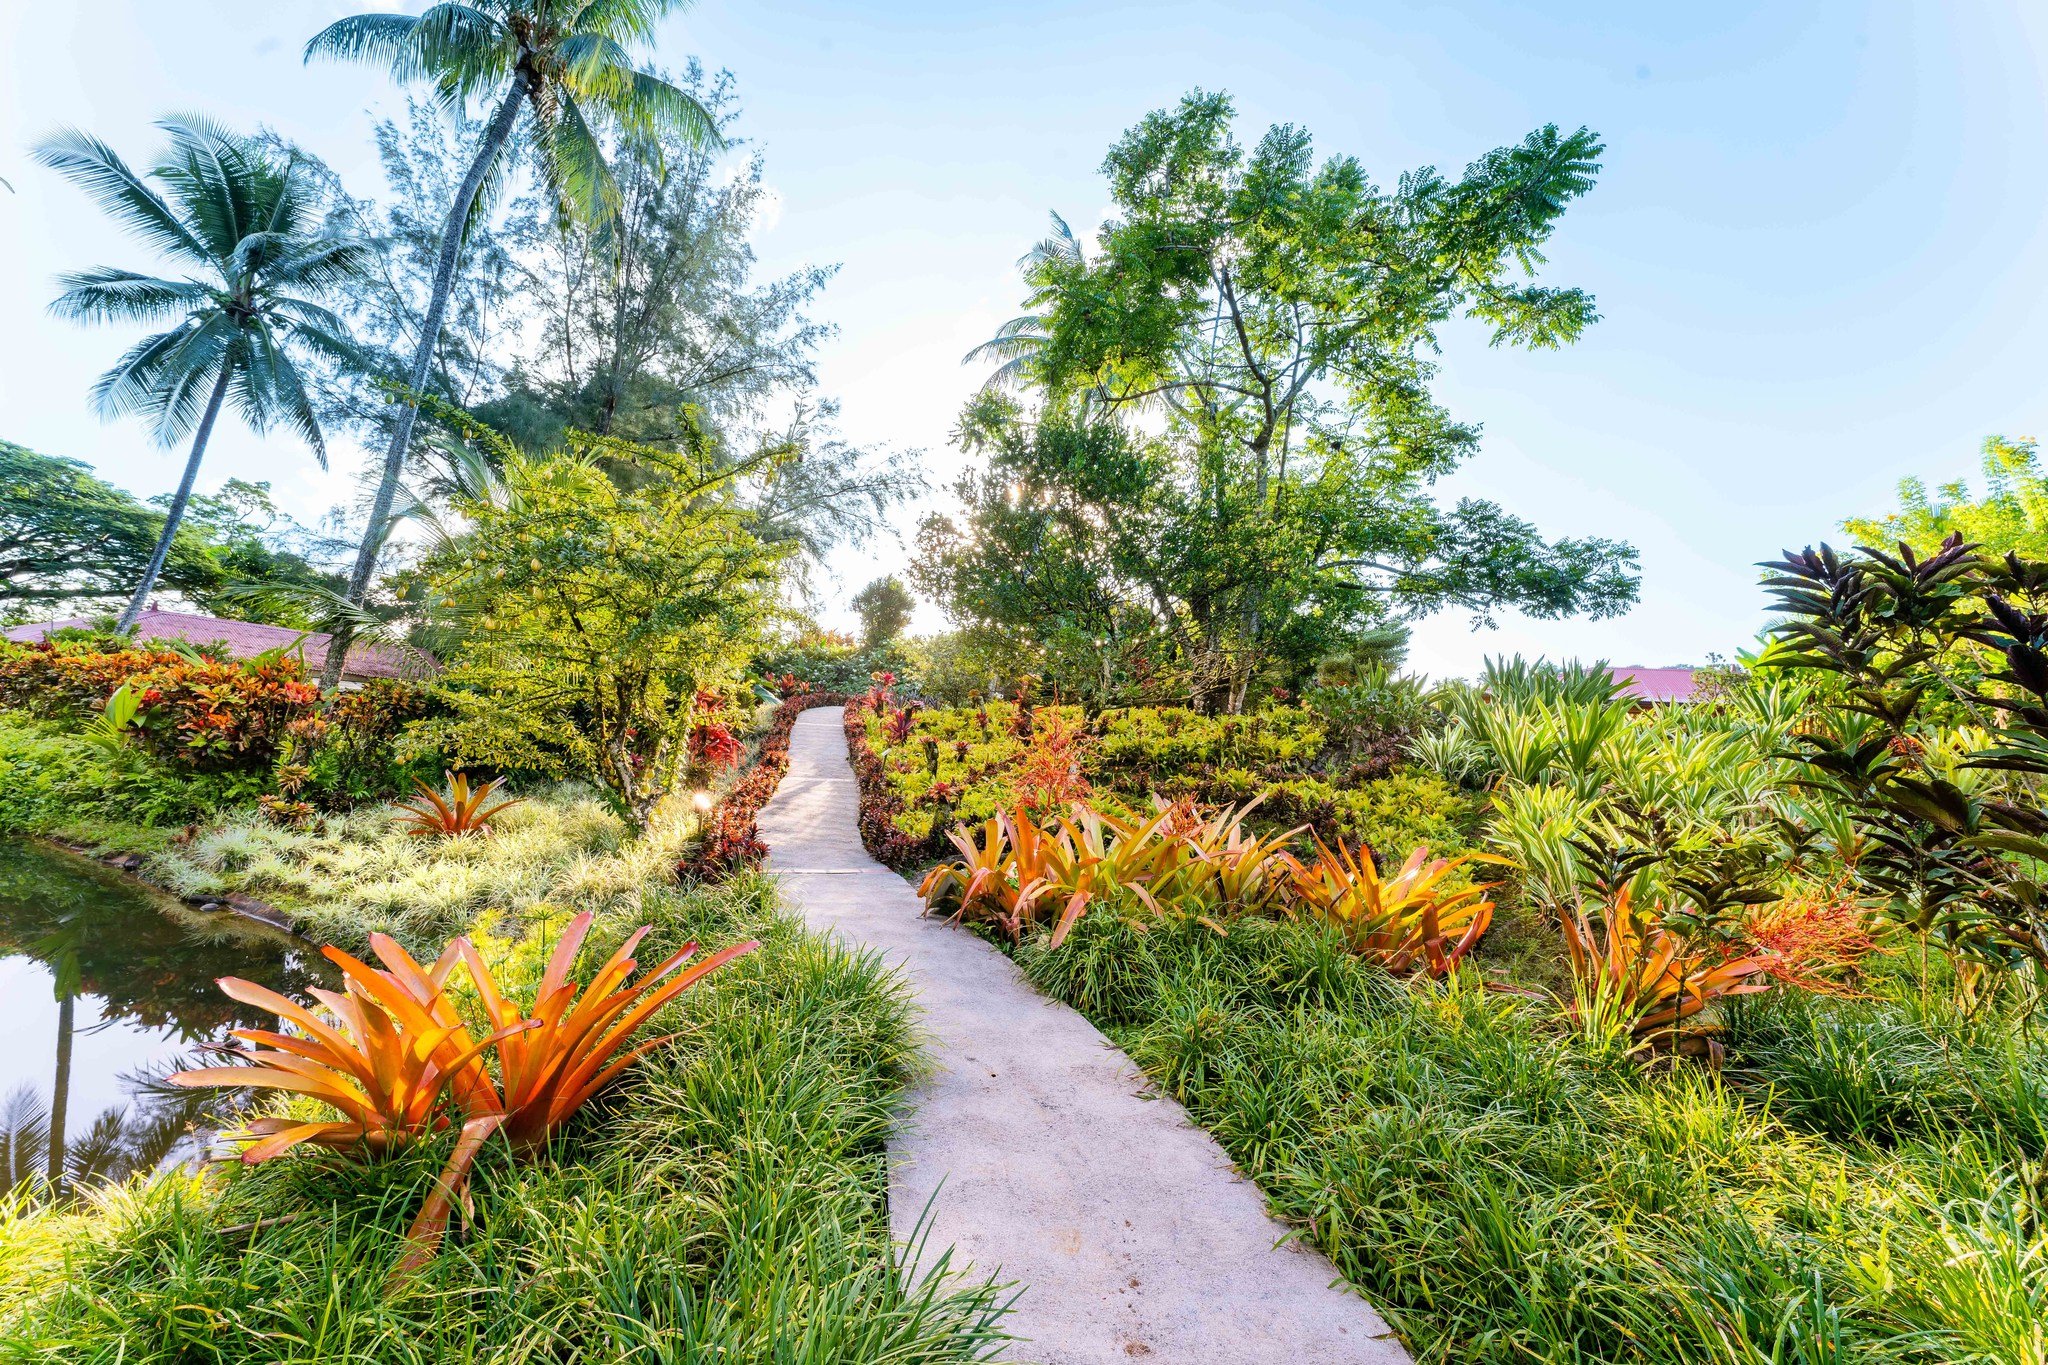 Tant de nuances en un jardin, c'est &ccedil;a Valombreuse ! 🌴📍

#jardeindevalombreuse #natureguadeloupe #fleur #visite #jardin #caraibes